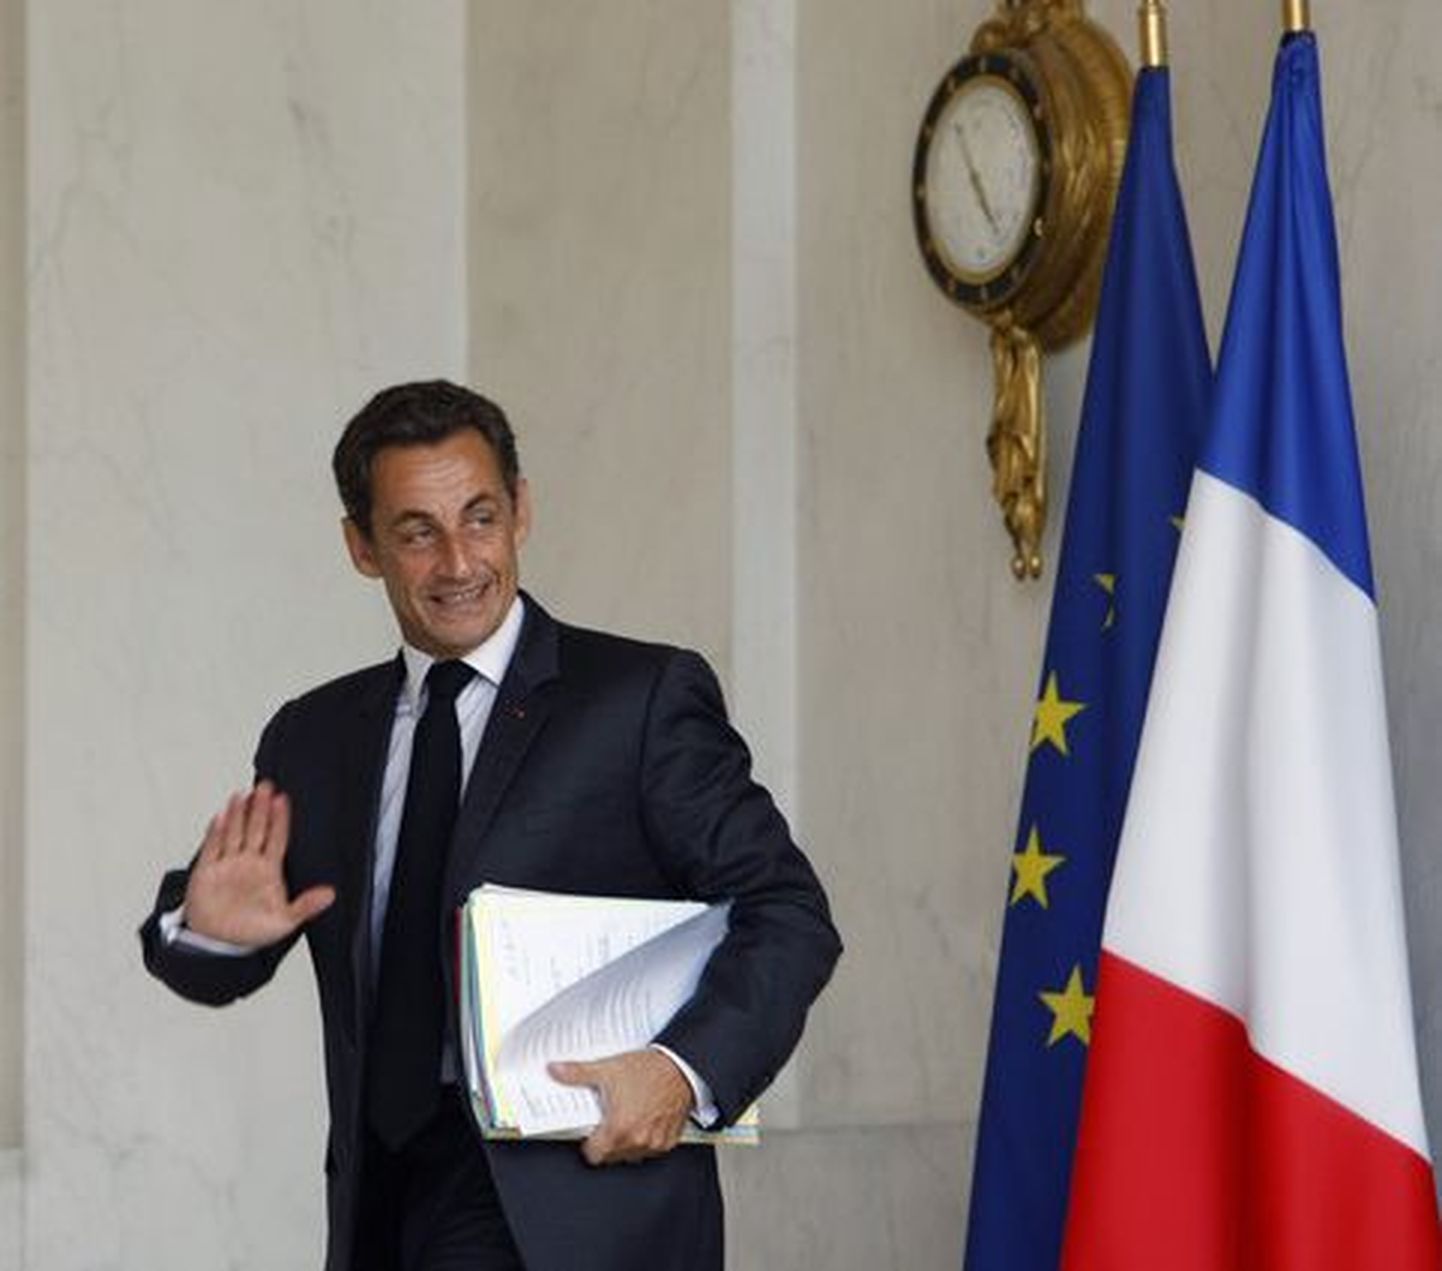 Prantsuse president Nicolas Sarkozy